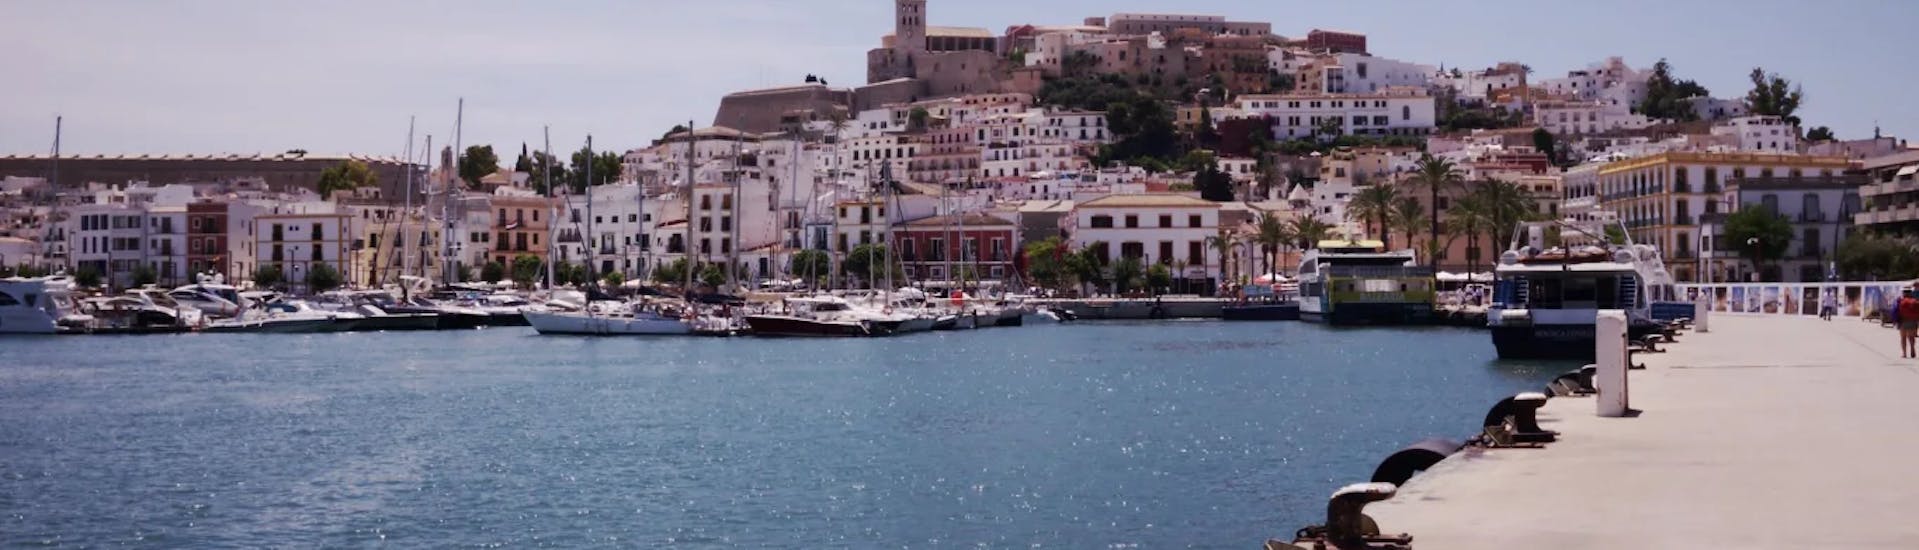 Gita in barca da Ibiza Città a Ibiza Città  e visita turistica.